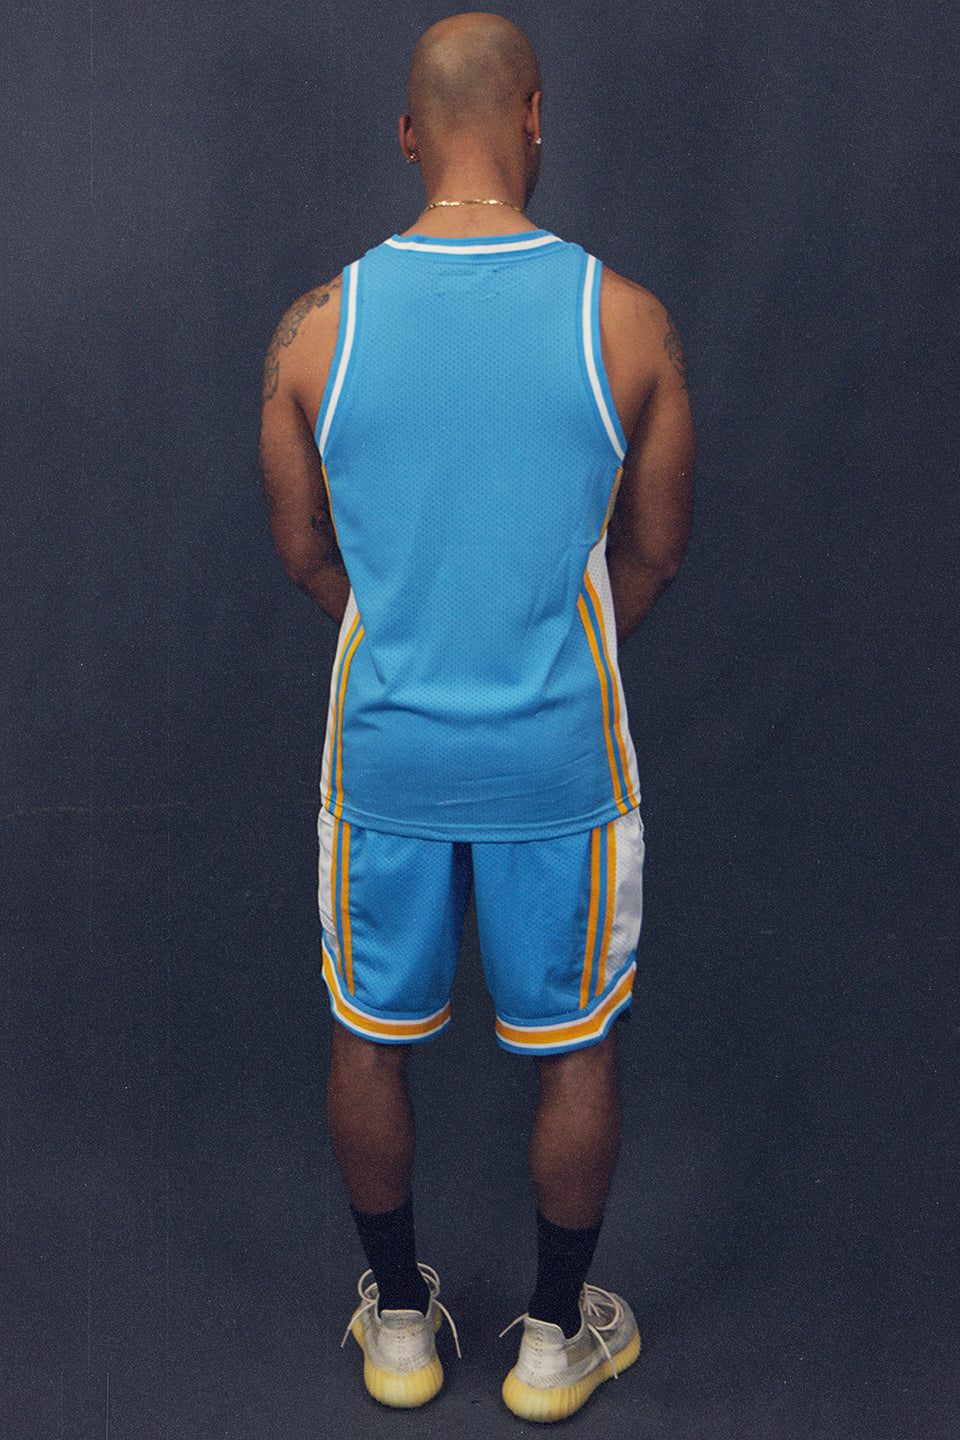 Back of the Men's Sleeveless Basketball Shirt Muscle Workout Sky Blue Denver Mesh Tank Top